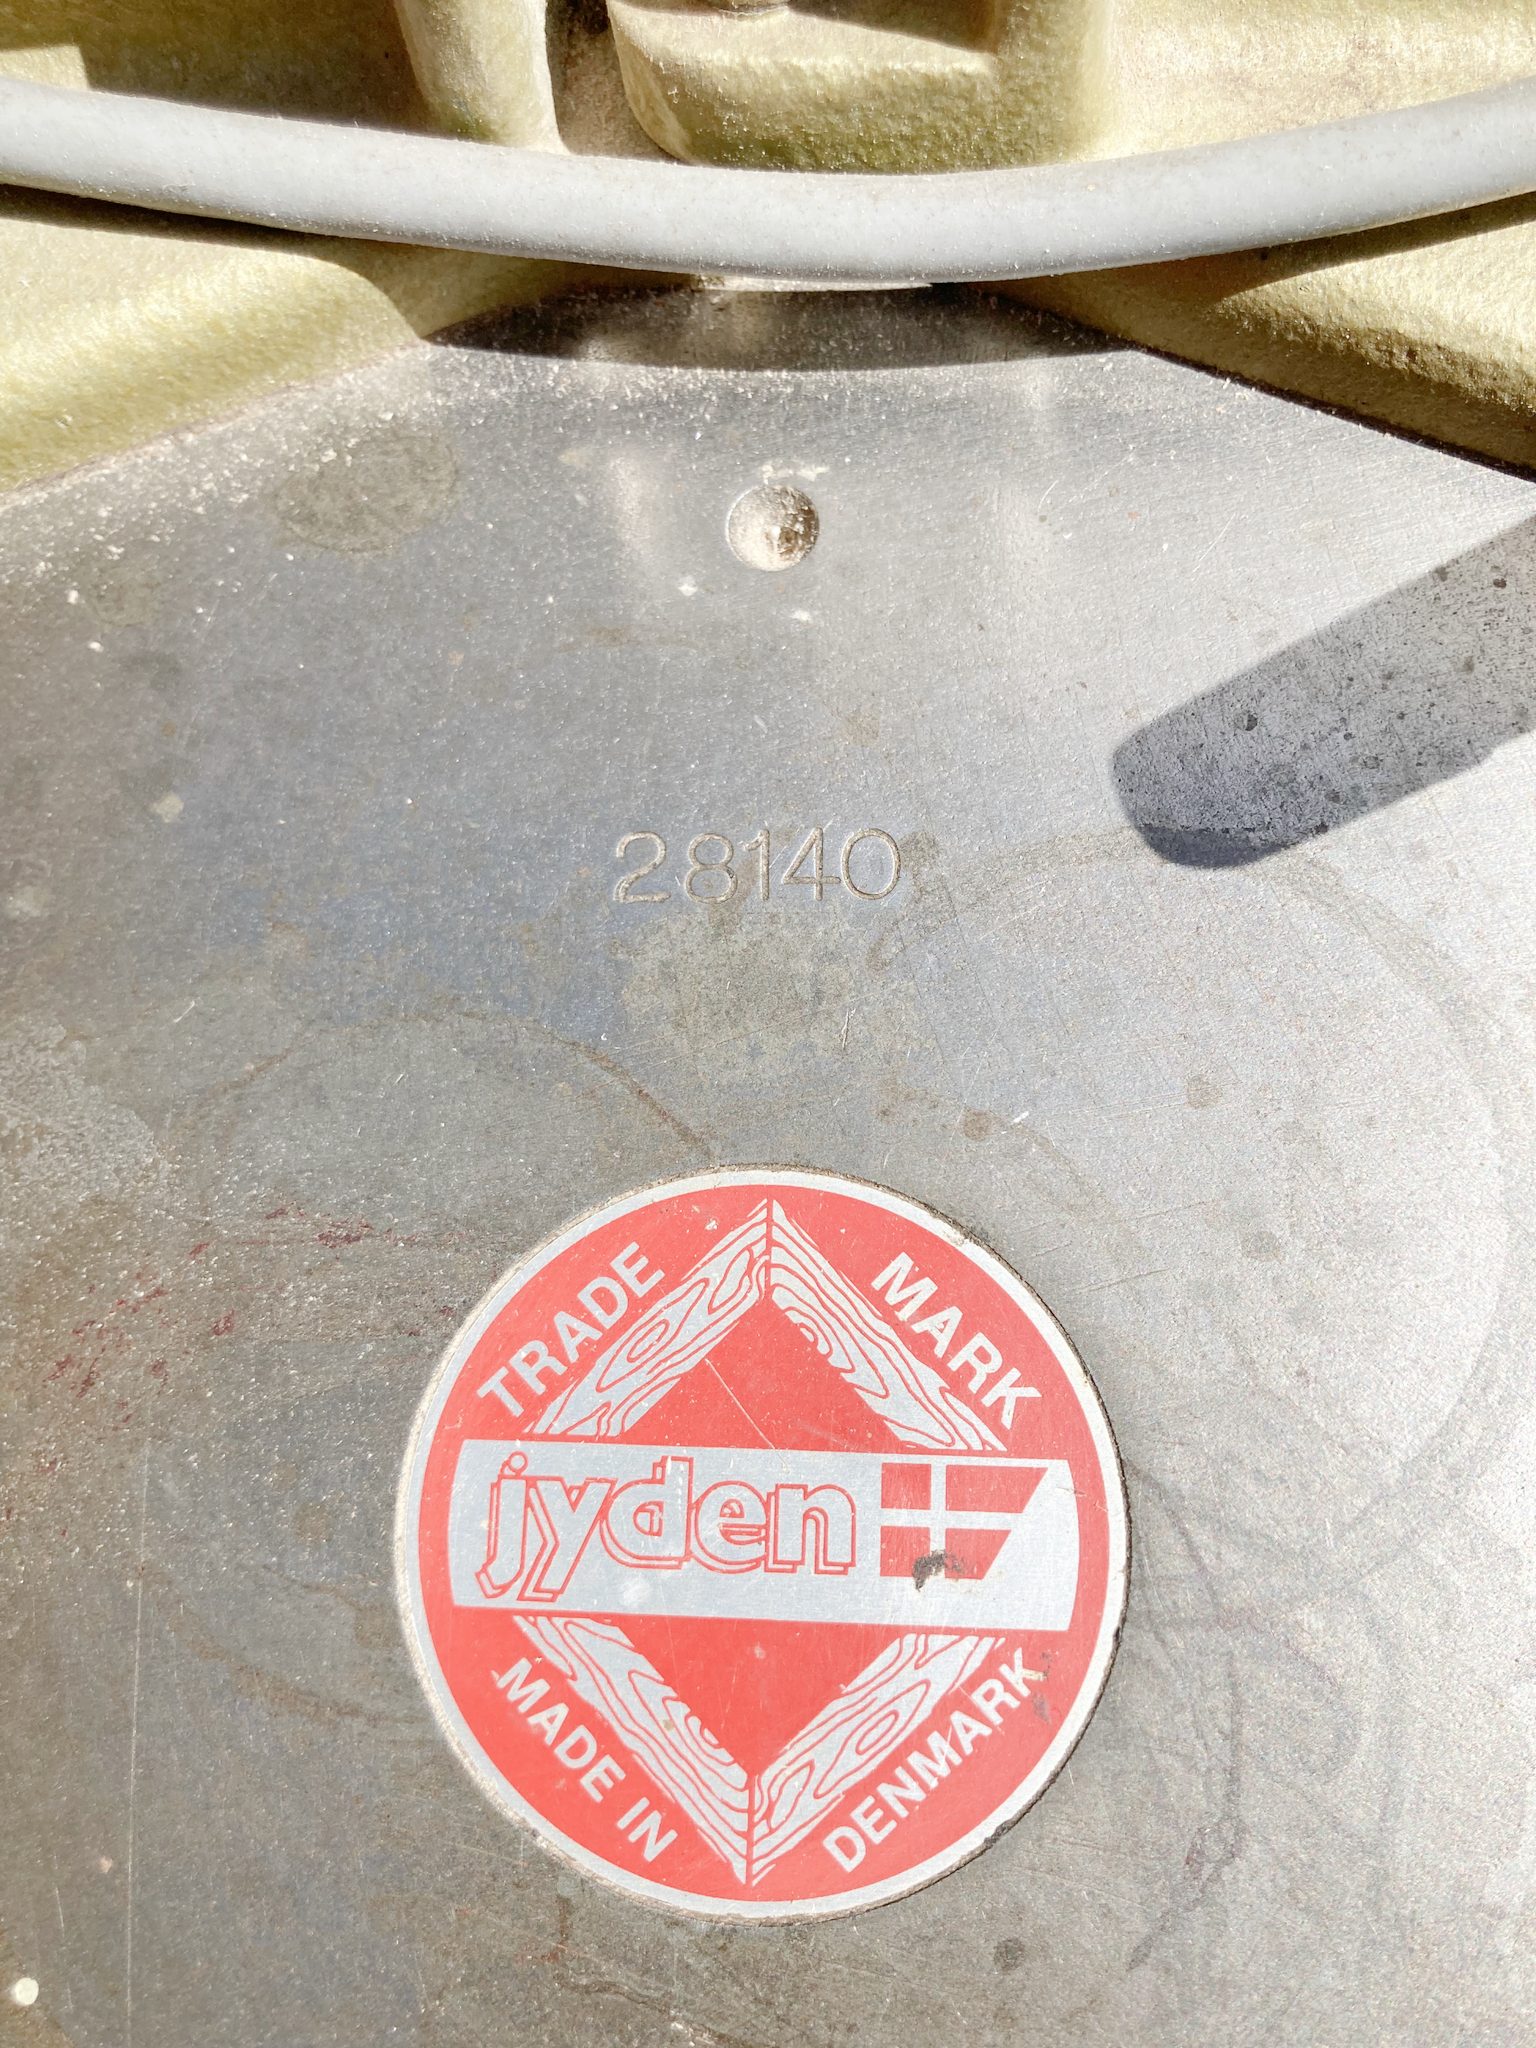 Jyden (Morso Type) Pneumatic Moulding Chopper (Used) Item # UE-032822C (California)